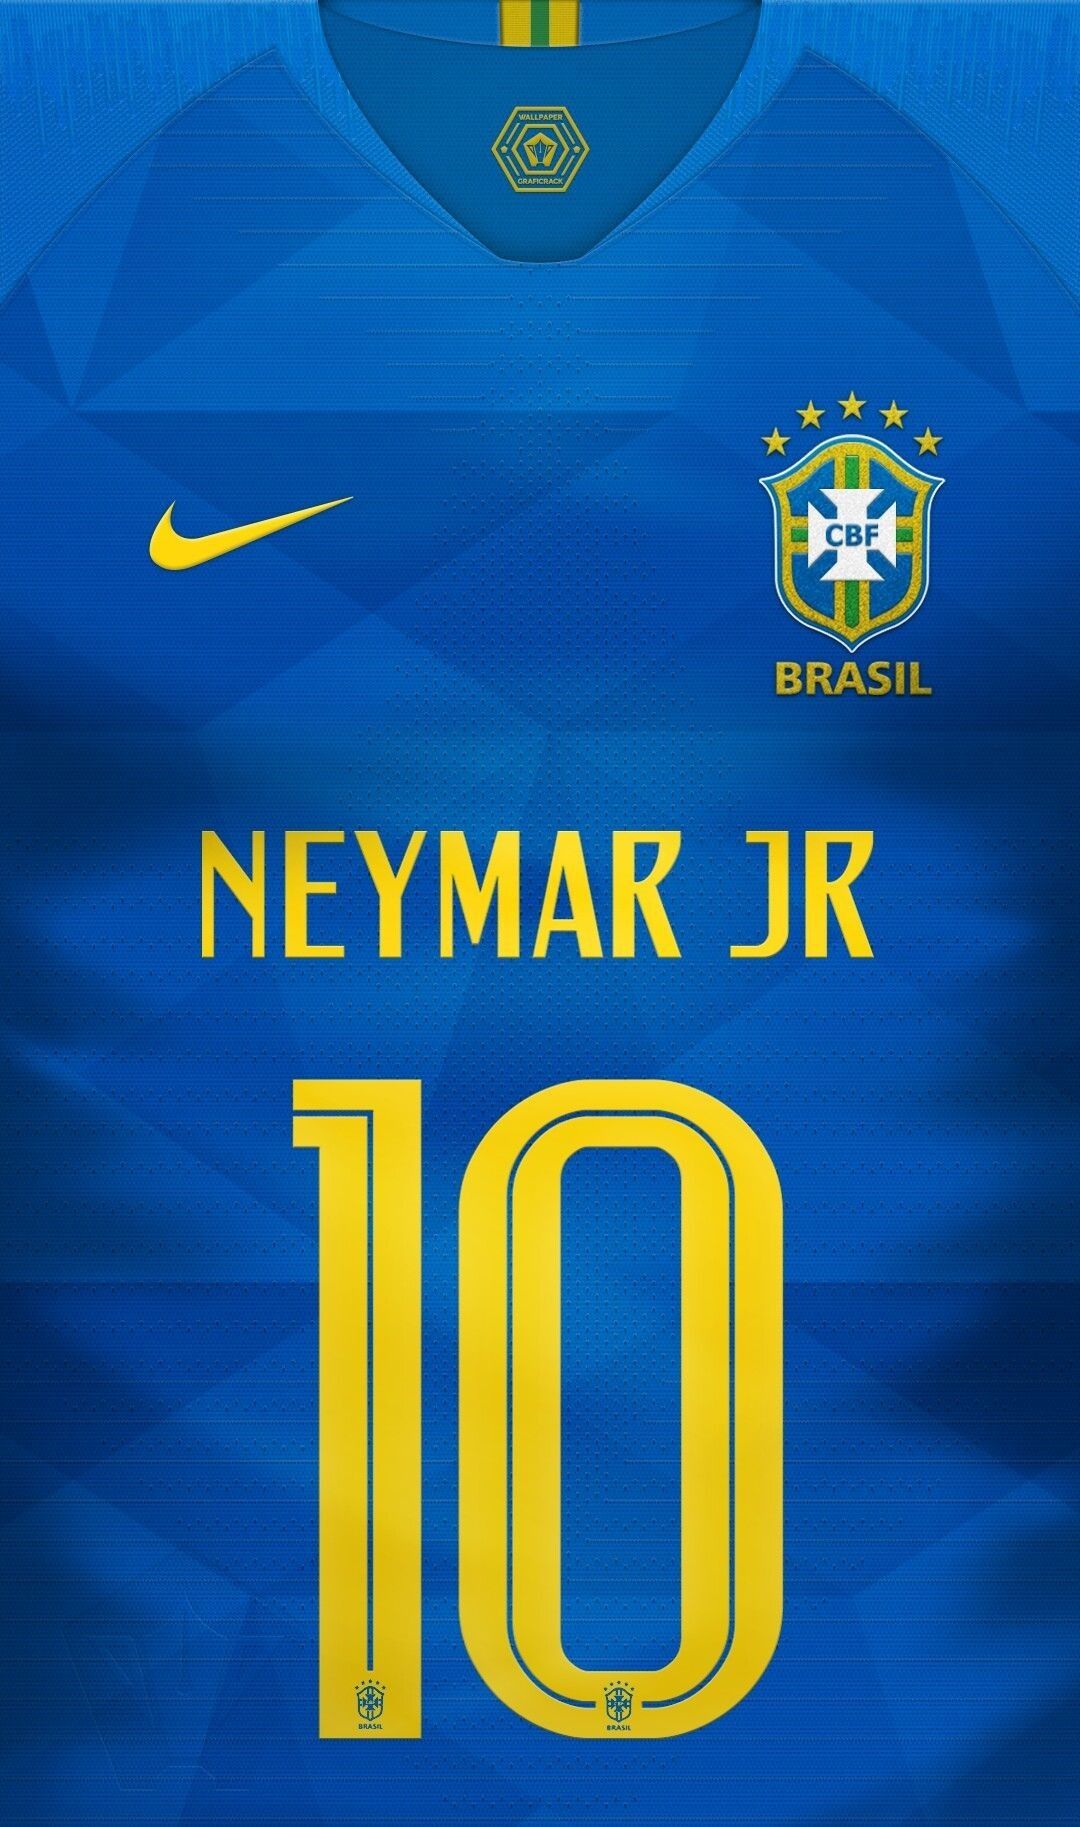 Brasil jersey of neymar jr10. Brazil football team, Football team kits, Neymar jr